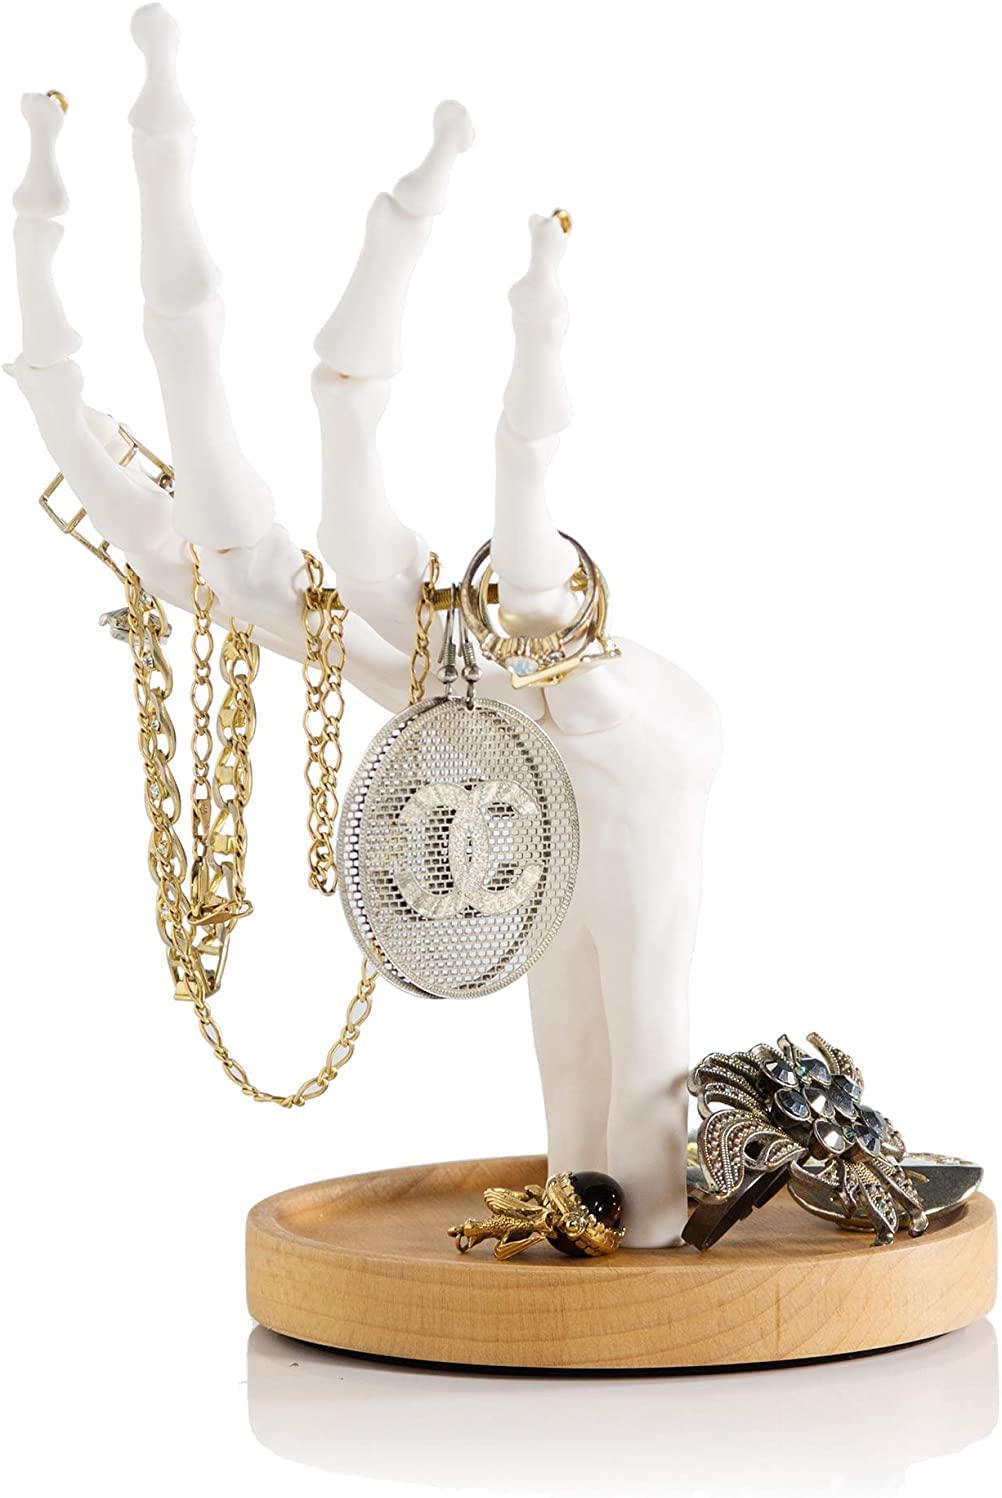 Suck UK Skeleton Hand Ring Holder & Jewelry Stand Earring Organizer & Necklace Holder For Gothic Decor Halloween Decorations & Bedroom Accessories Bracelet Holder & Organizer White